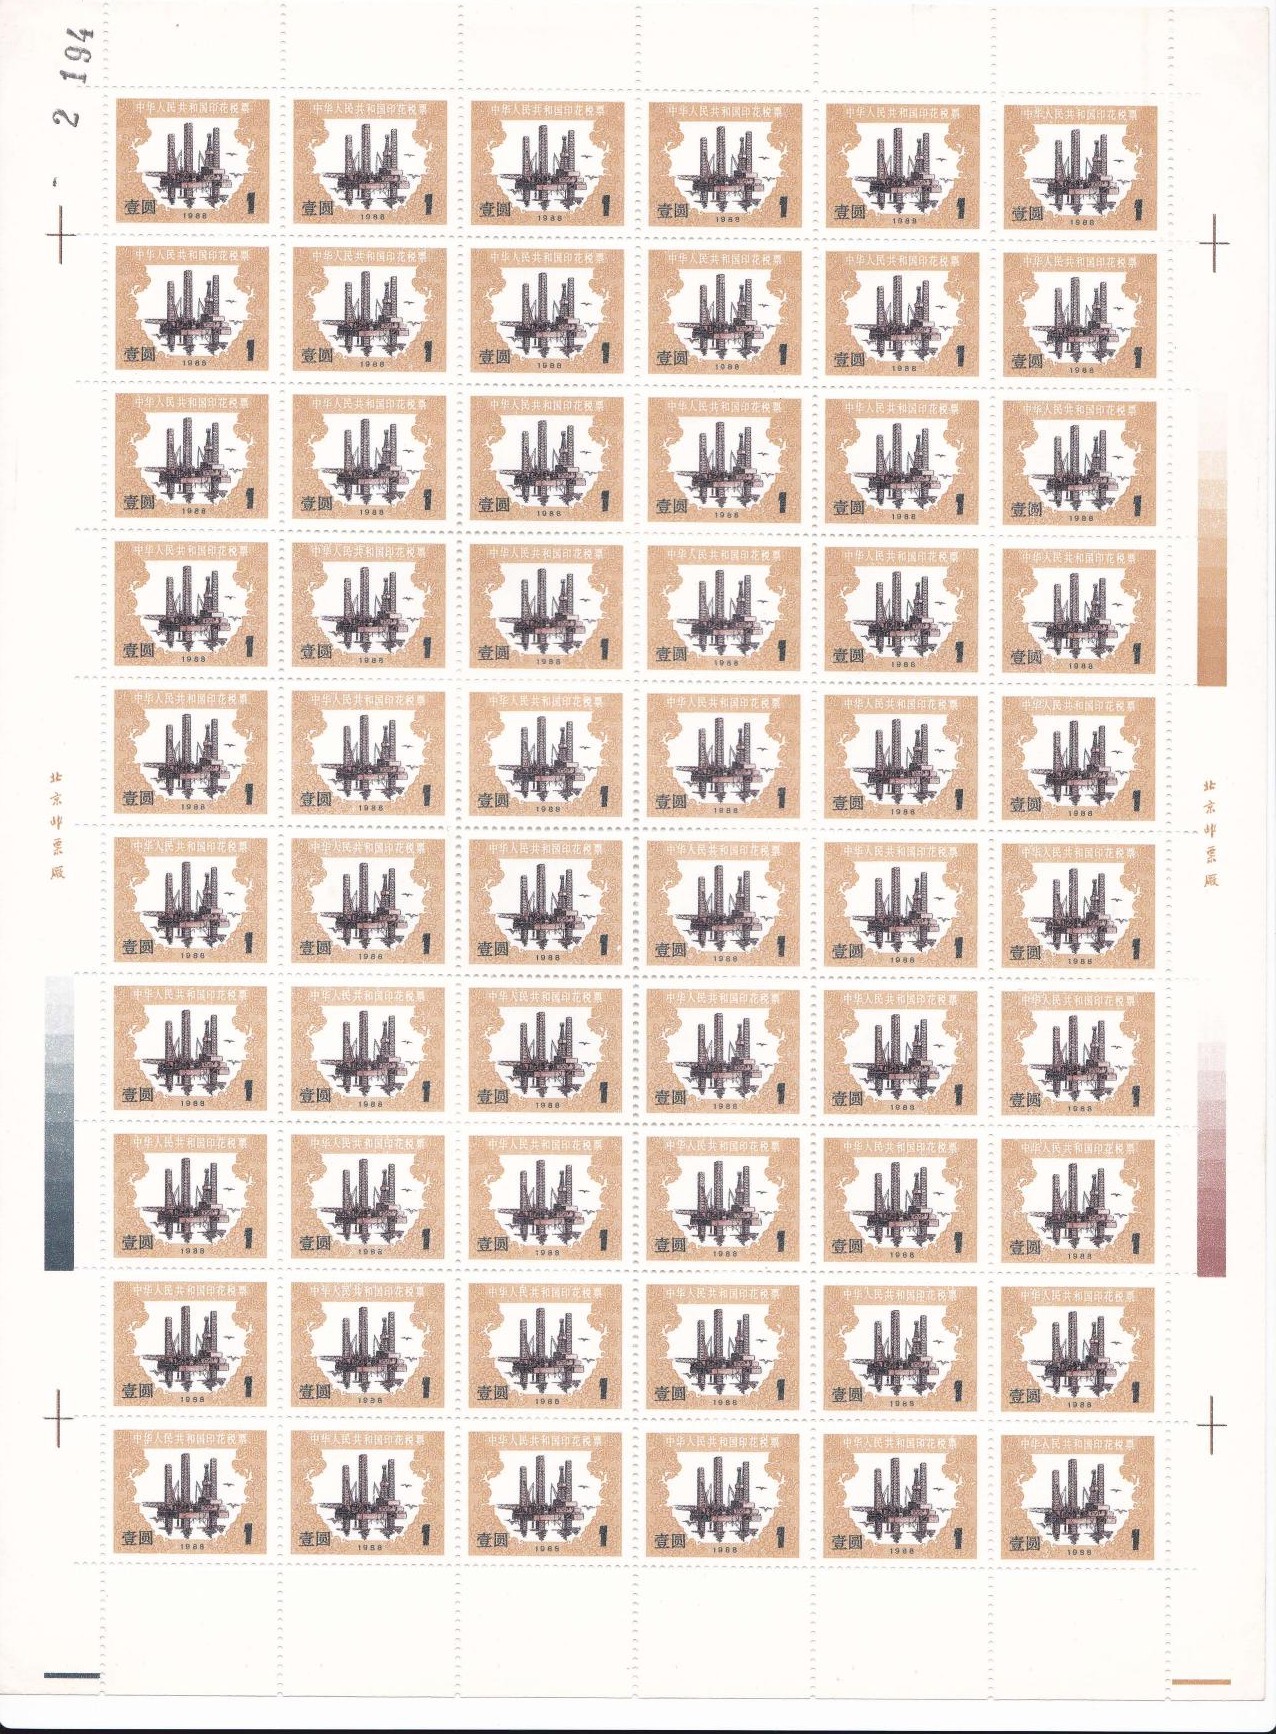 R2276, P.R.China Revenue Stamps, 1 Yuan, Full Sheet 60 pcs, 1988